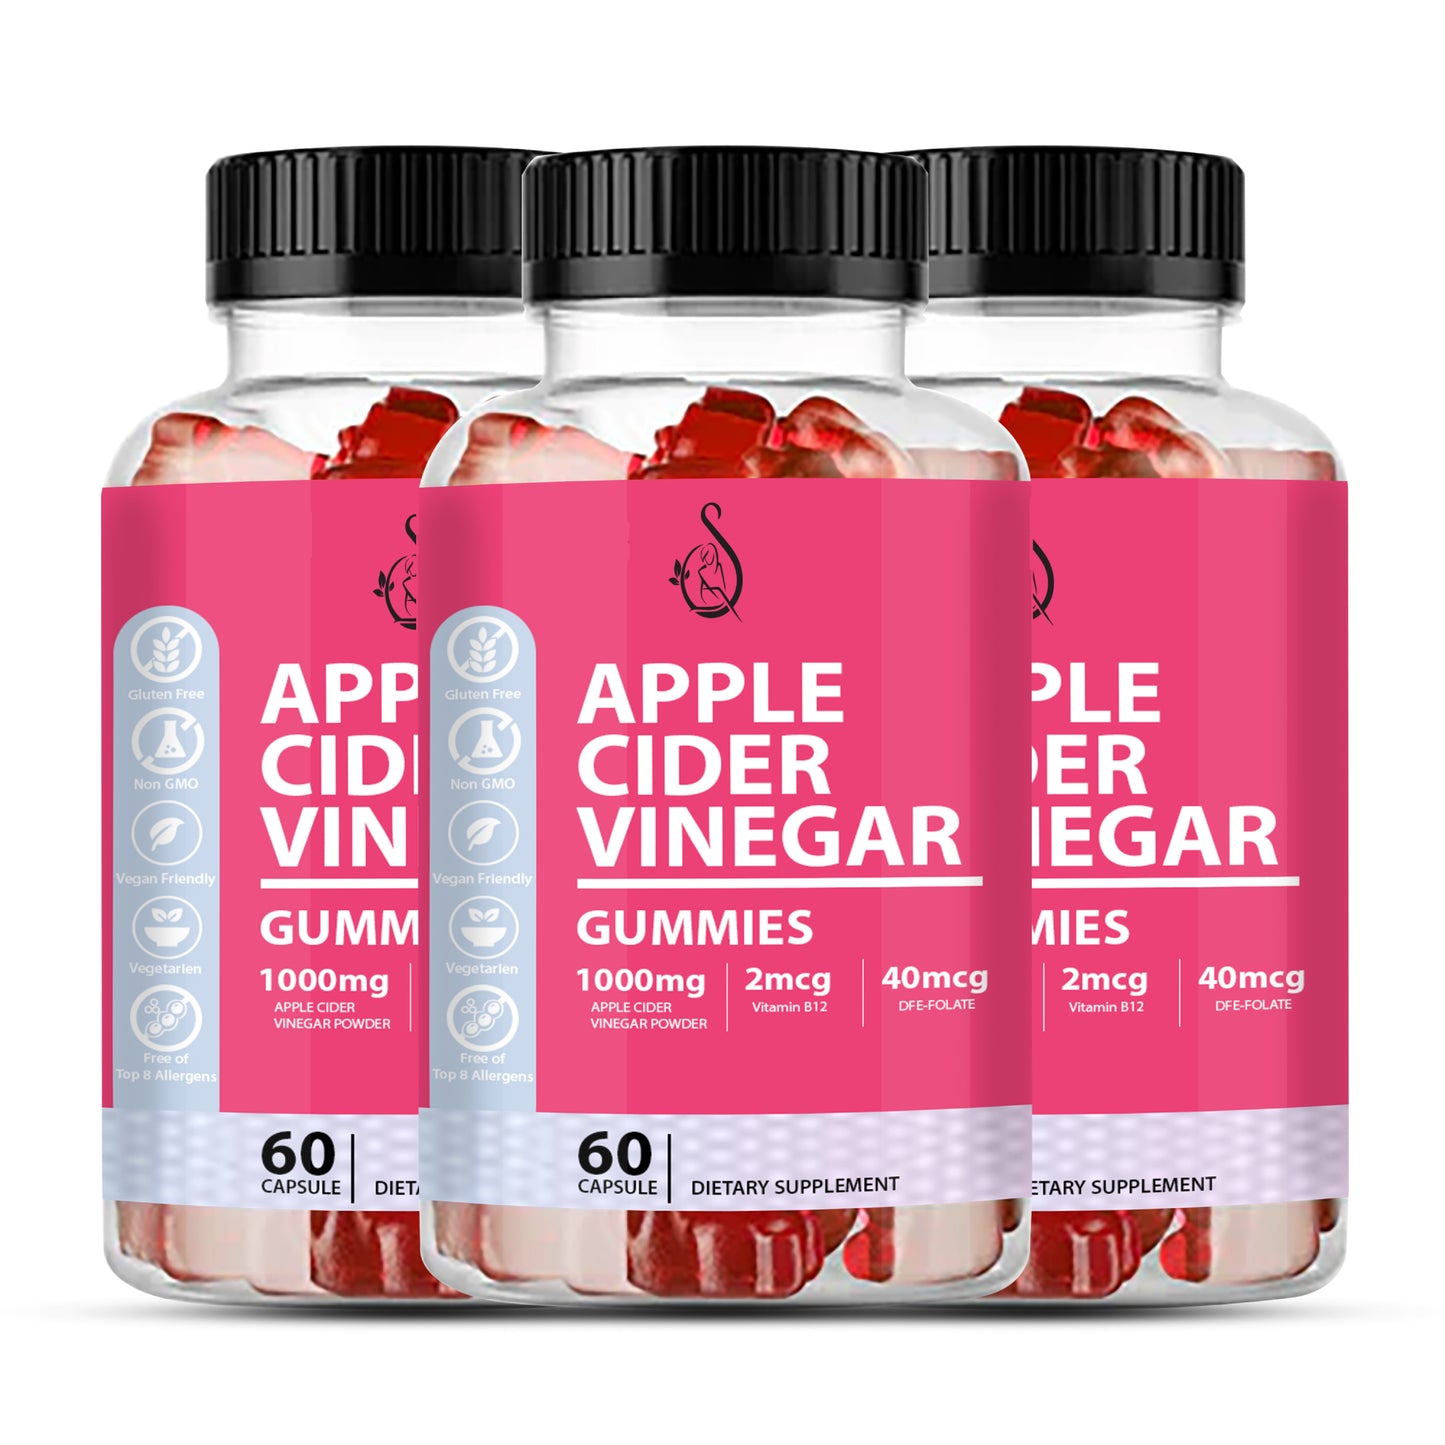 Apple Cider Vinegar Gummies for Optimal Health and Weight Management - sampuraka